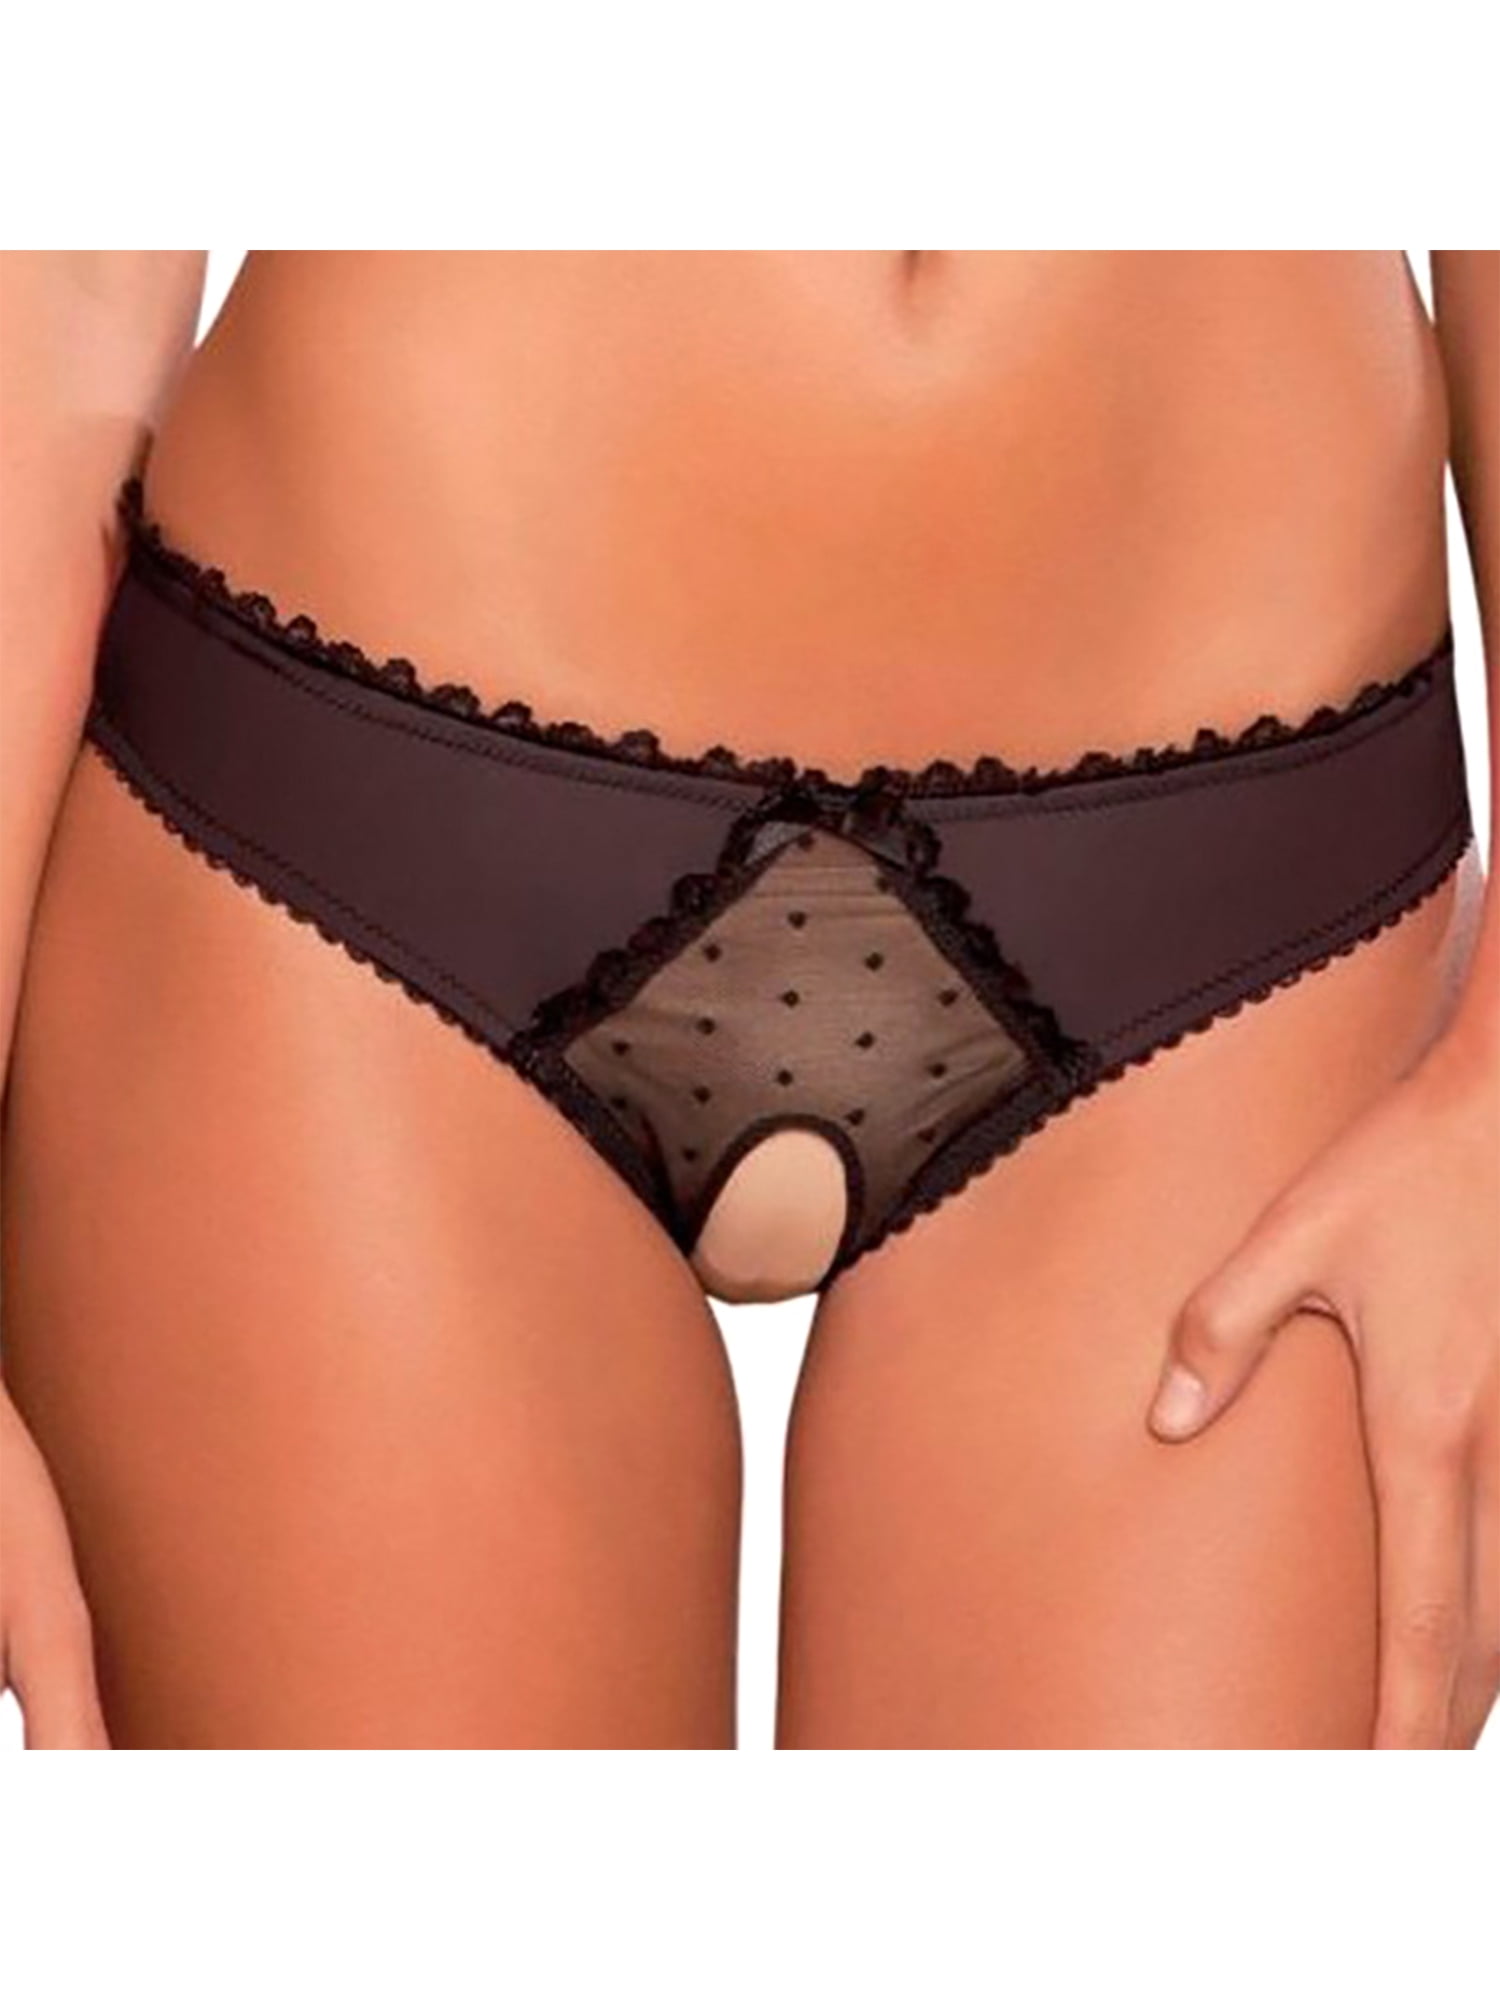 Women's Lace Sexy Hollow Open Crotch Panties Underwear Knickers Lingerie  Thongs 